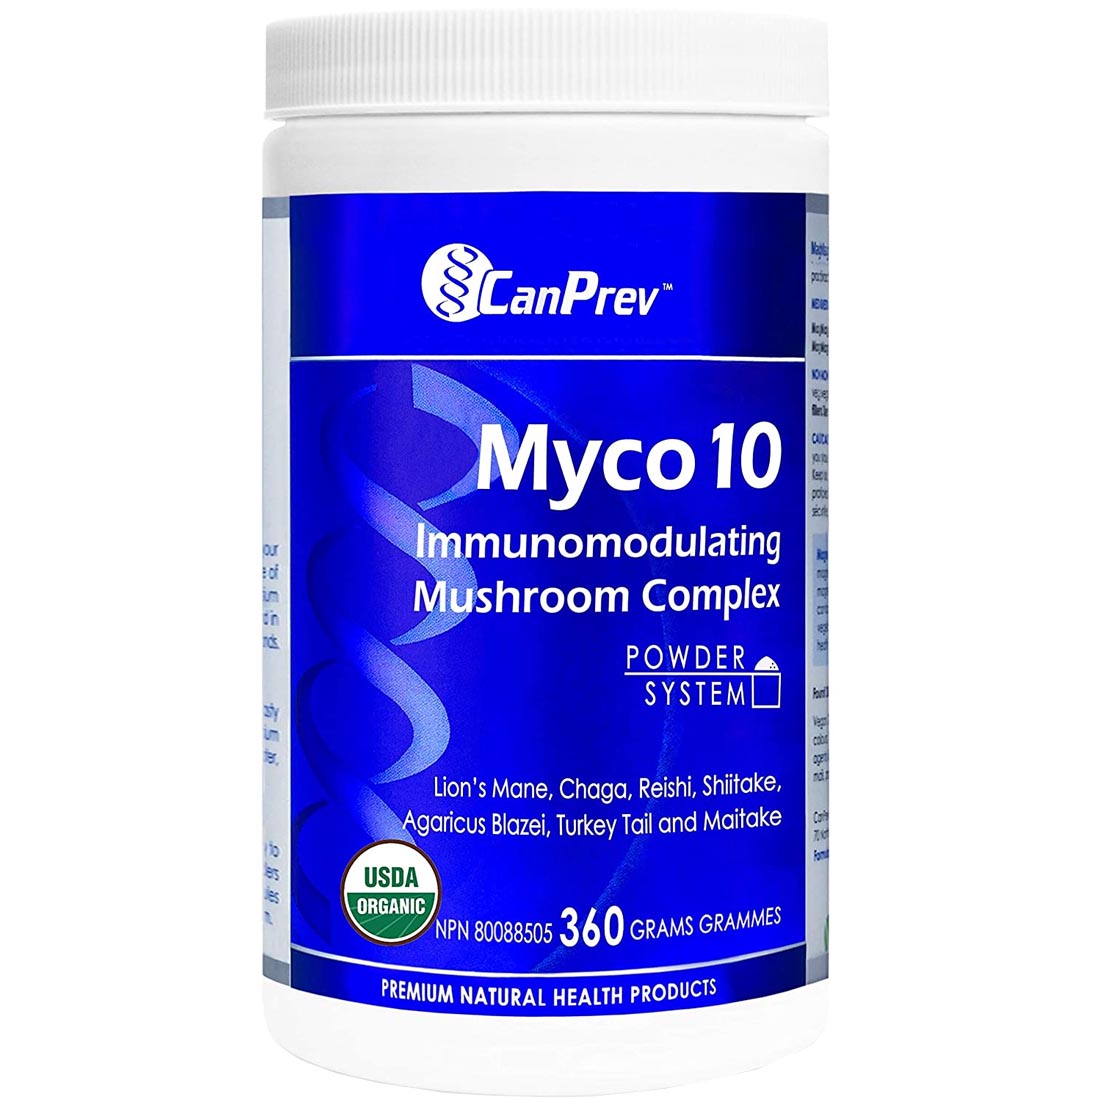 CanPrev Myco 10 Immunomodulating Mushroom Complex Powder, 360g